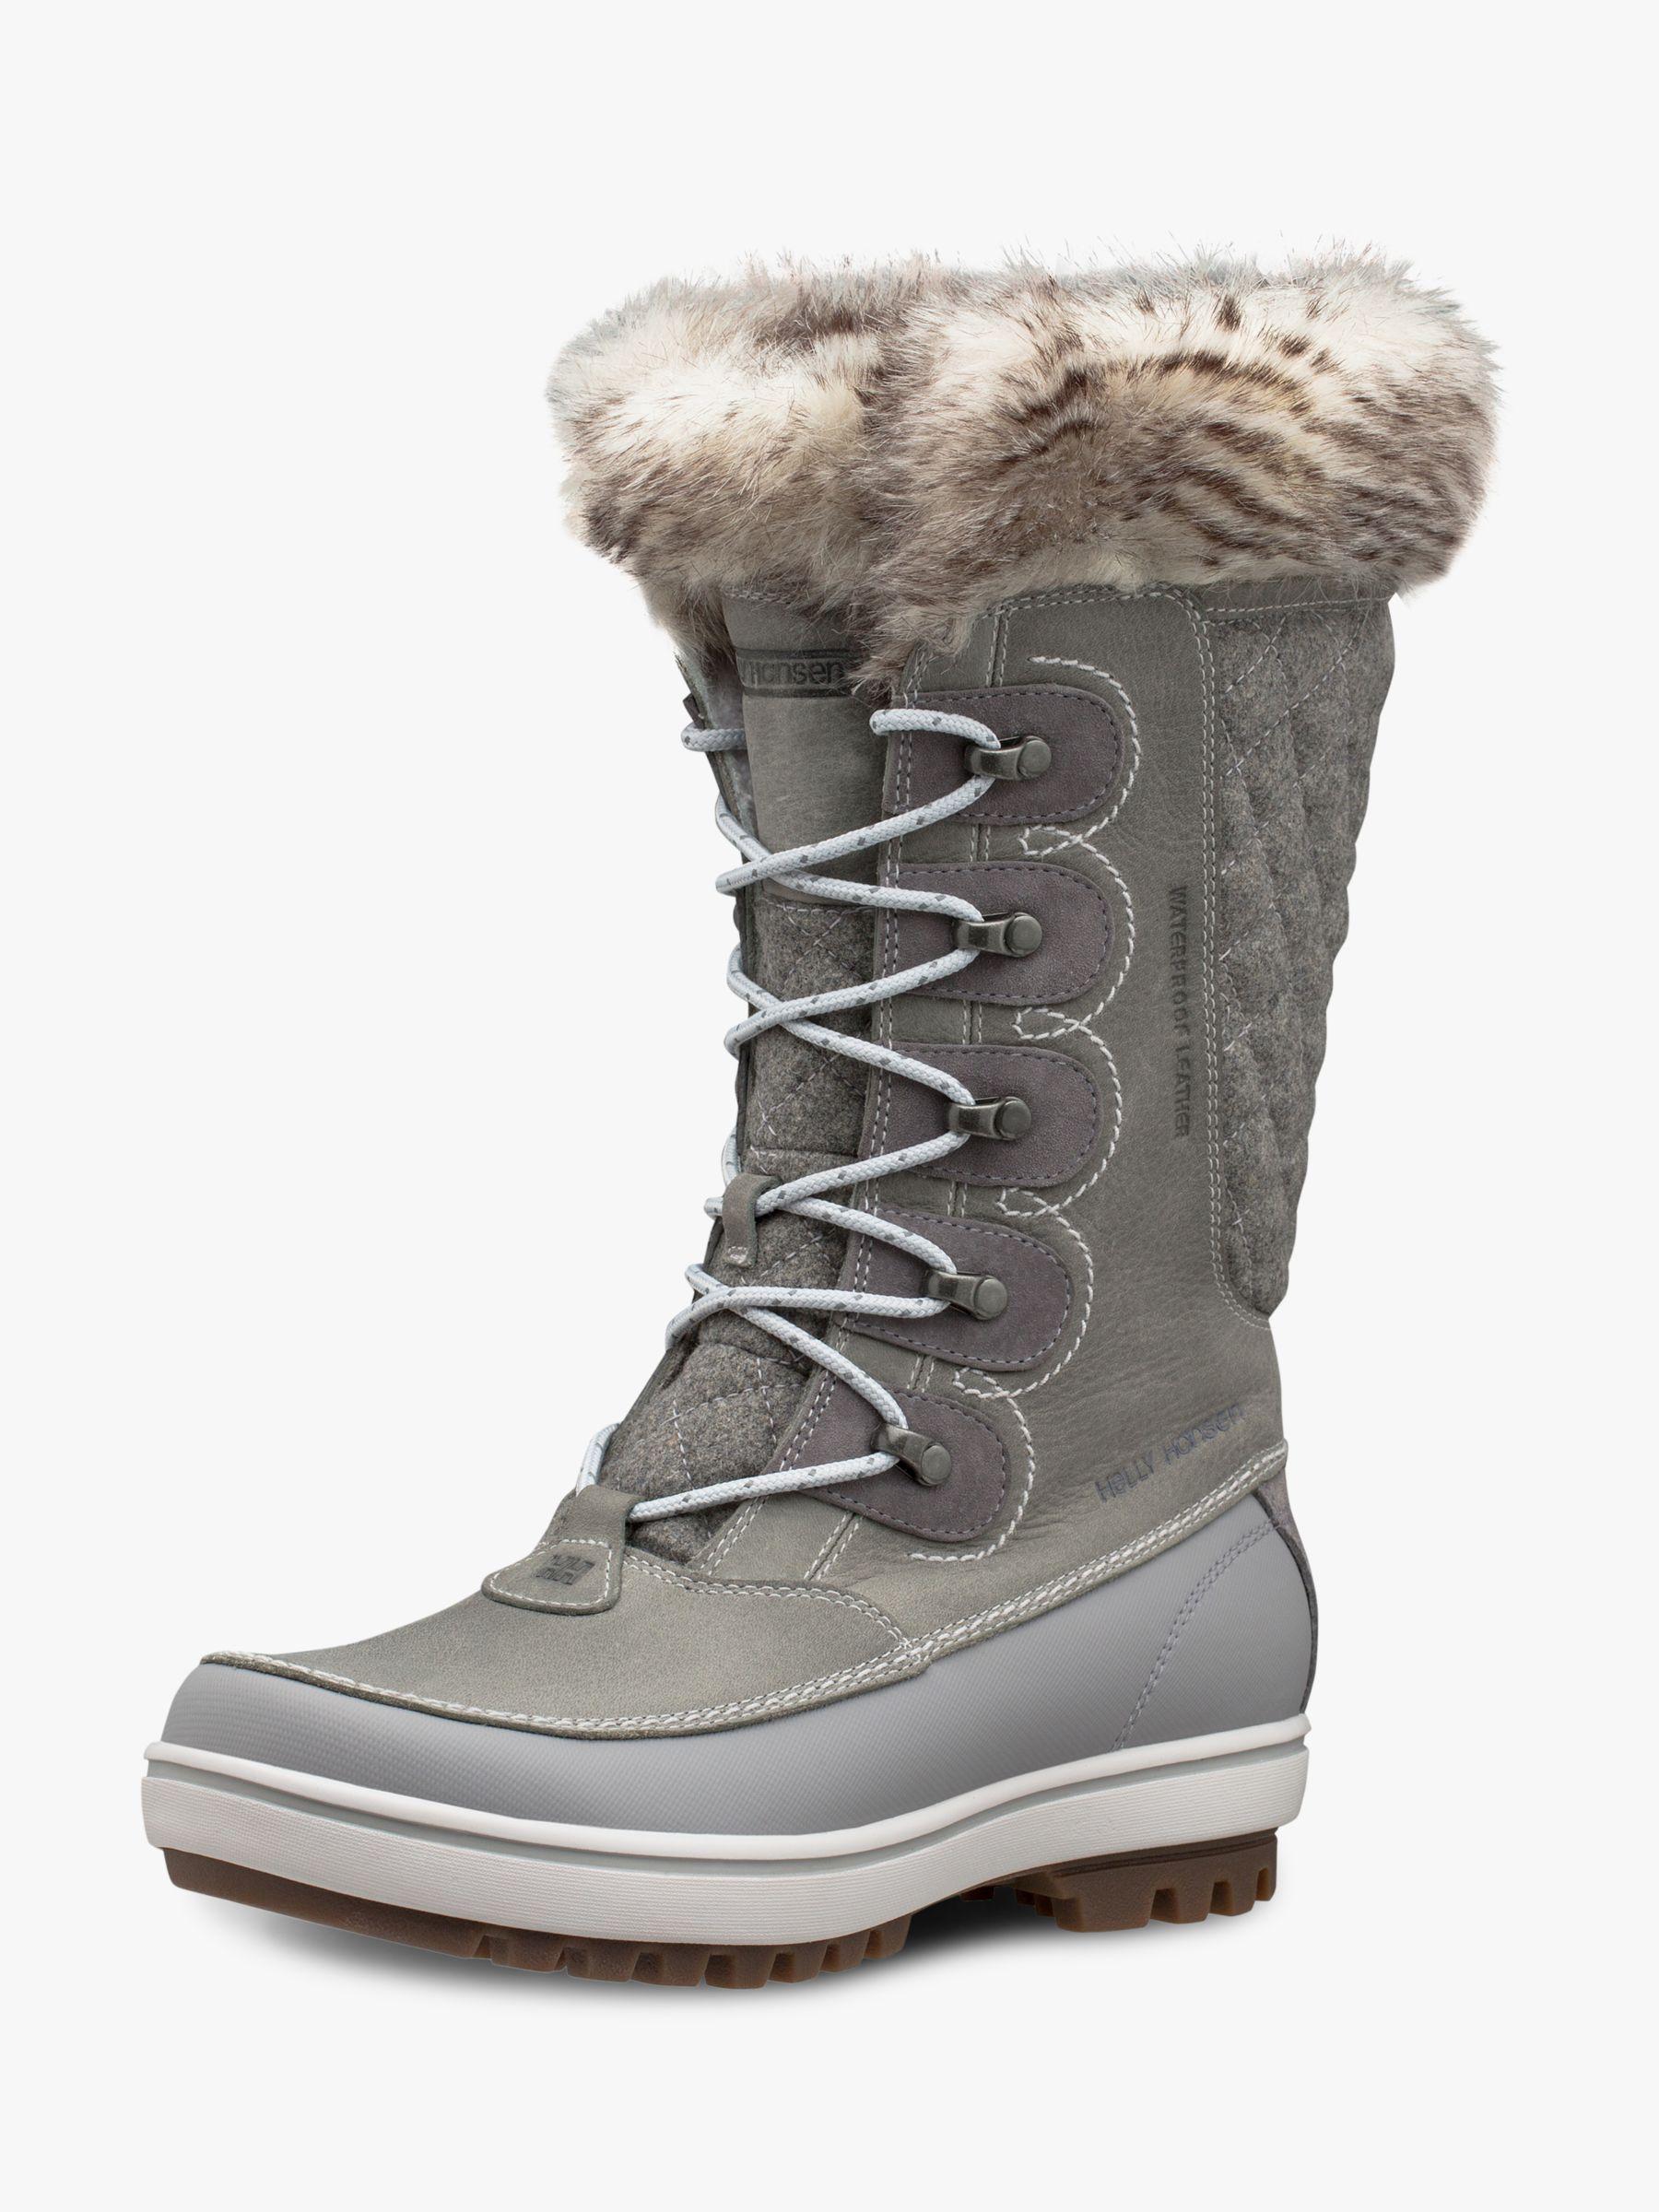 helly hansen womens snow boots